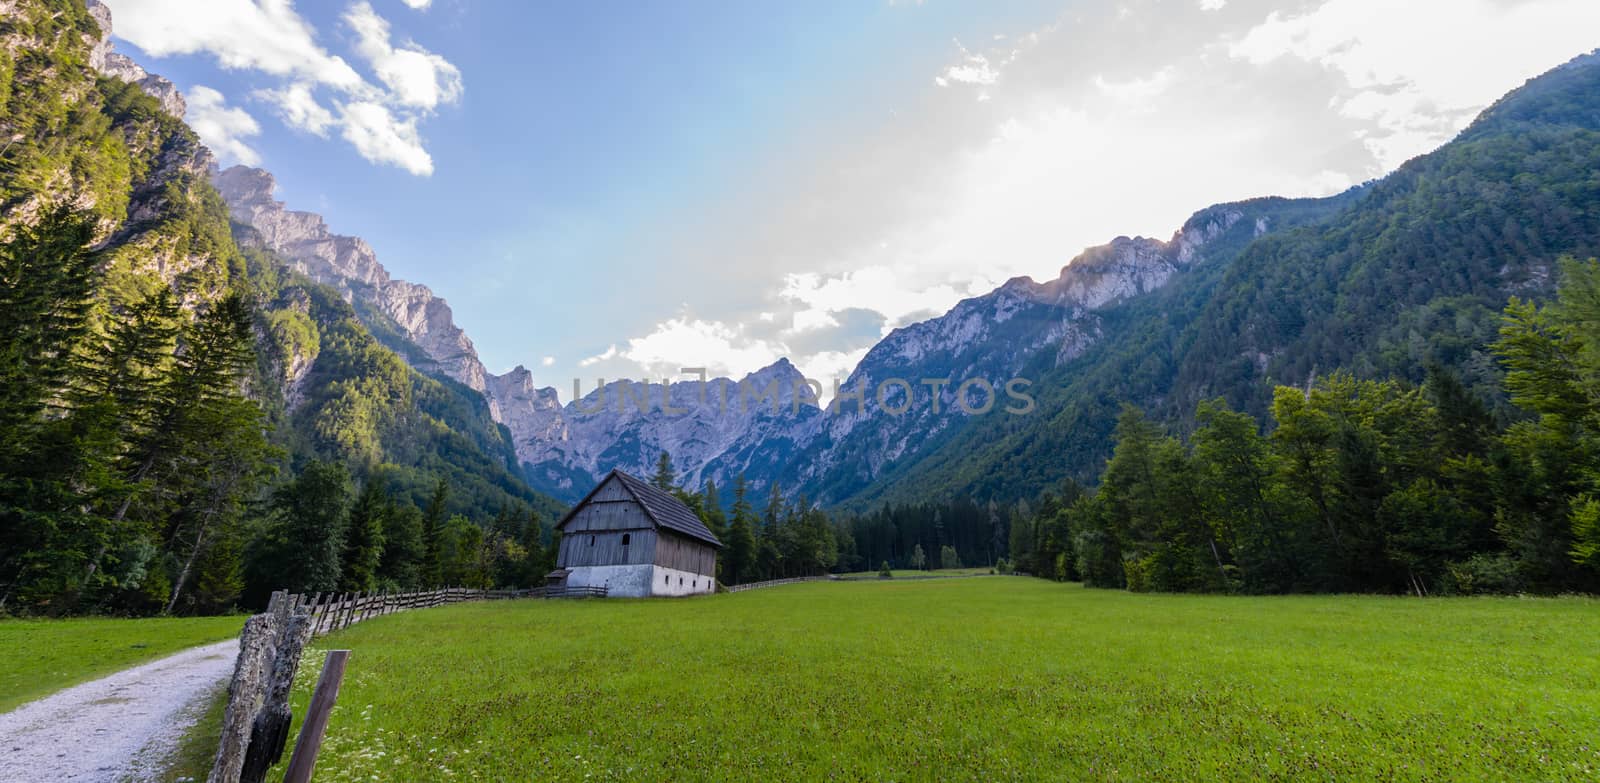 Mountain farm house on meadow in European Alps, Robanov kot, Slovenia by asafaric